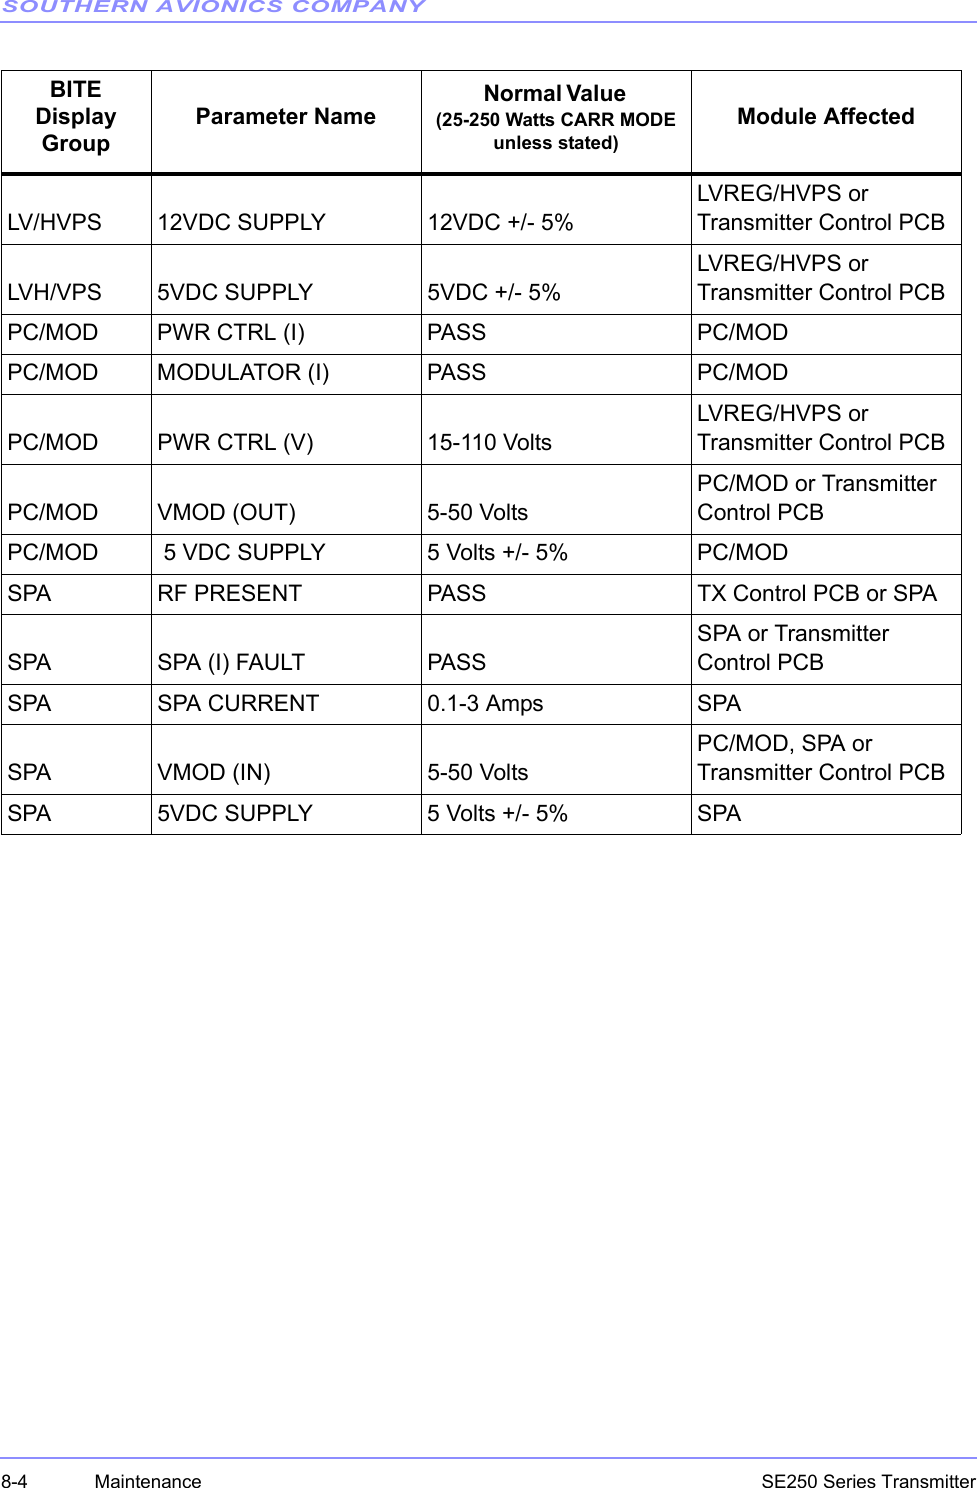 SOUTHERN AVIONICS COMPANYSE250 Series Transmitter8-4 MaintenanceLV/HVPS 12VDC SUPPLY 12VDC +/- 5%LVREG/HVPS or Transmitter Control PCBLVH/VPS 5VDC SUPPLY 5VDC +/- 5%LVREG/HVPS or Transmitter Control PCBPC/MOD PWR CTRL (I) PASS PC/MODPC/MOD MODULATOR (I) PASS PC/MODPC/MOD  PWR CTRL (V) 15-110 VoltsLVREG/HVPS or Transmitter Control PCBPC/MOD  VMOD (OUT) 5-50 VoltsPC/MOD or Transmitter Control PCBPC/MOD  5 VDC SUPPLY 5 Volts +/- 5% PC/MODSPA RF PRESENT PASS TX Control PCB or SPASPA  SPA (I) FAULT PASSSPA or Transmitter Control PCBSPA  SPA CURRENT 0.1-3 Amps SPASPA VMOD (IN) 5-50 Volts PC/MOD, SPA or Transmitter Control PCBSPA  5VDC SUPPLY 5 Volts +/- 5% SPABITE Display GroupParameter NameNormal Va l u e              (25-250 Watts CARR MODE unless stated)Module Affected